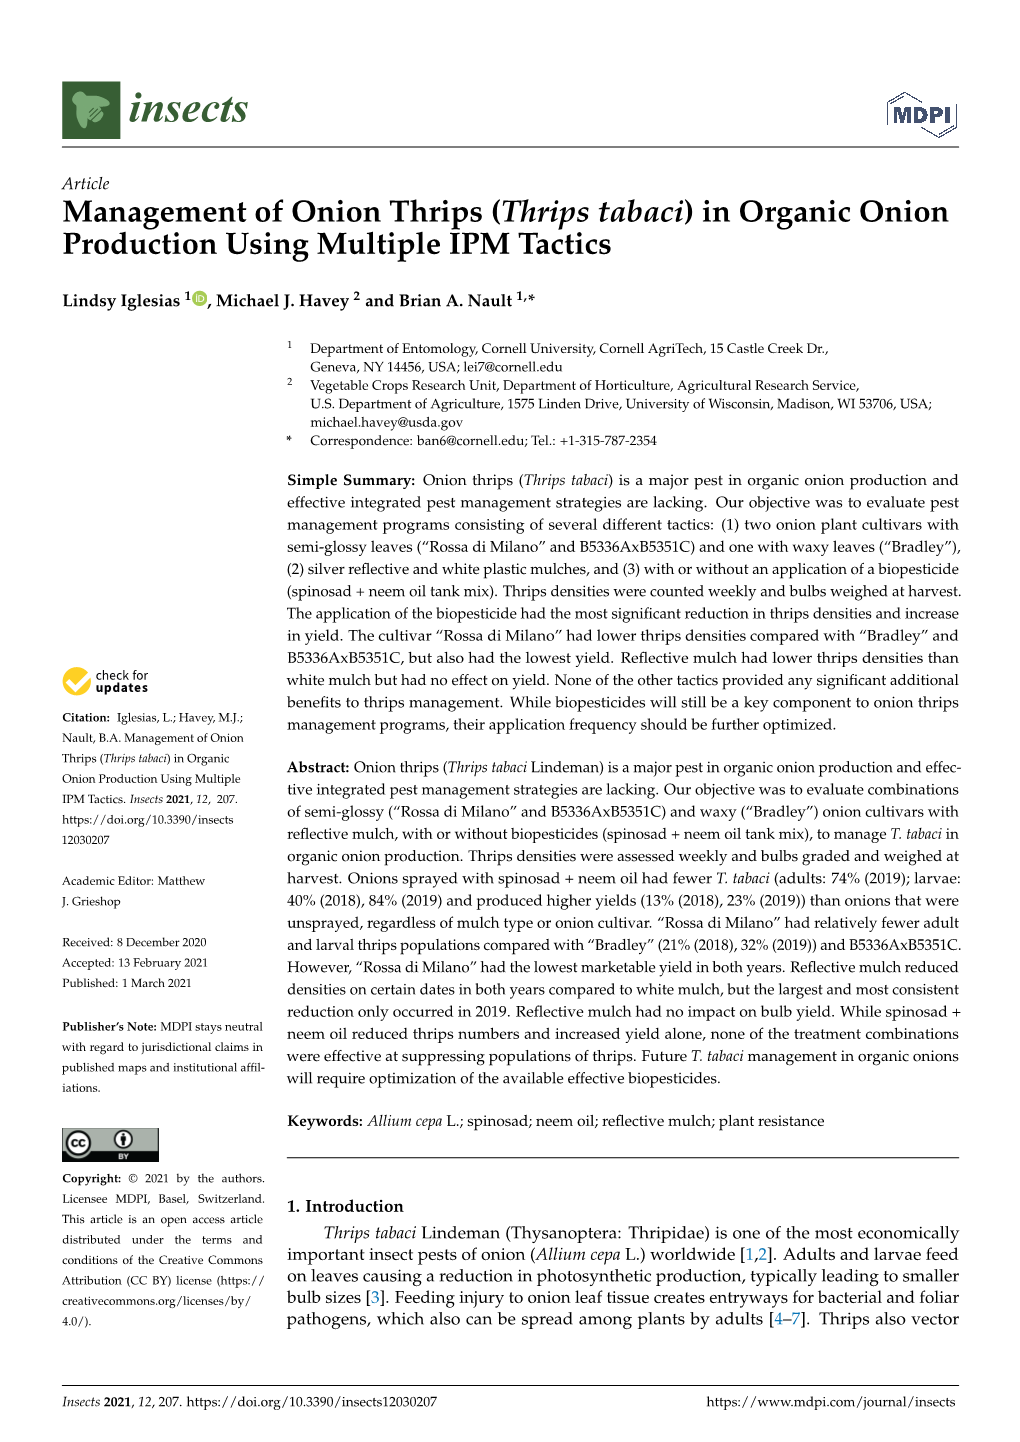 (Thrips Tabaci) in Organic Onion Production Using Multiple IPM Tactics